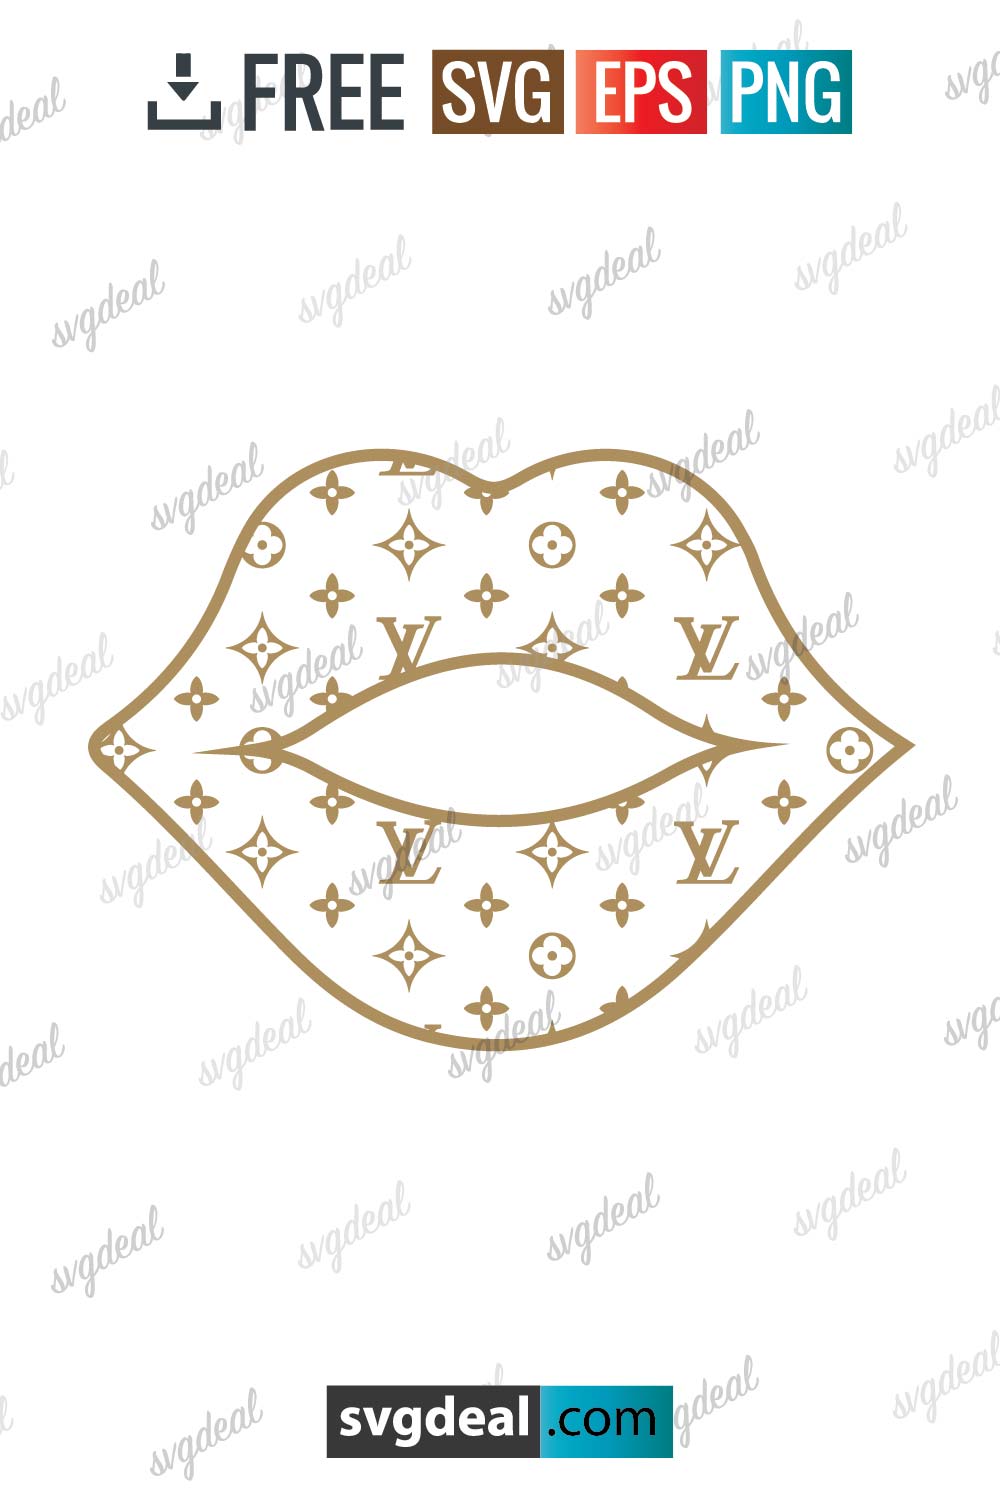 Louis Vuitton Lips SVG Free - Free SVG Files